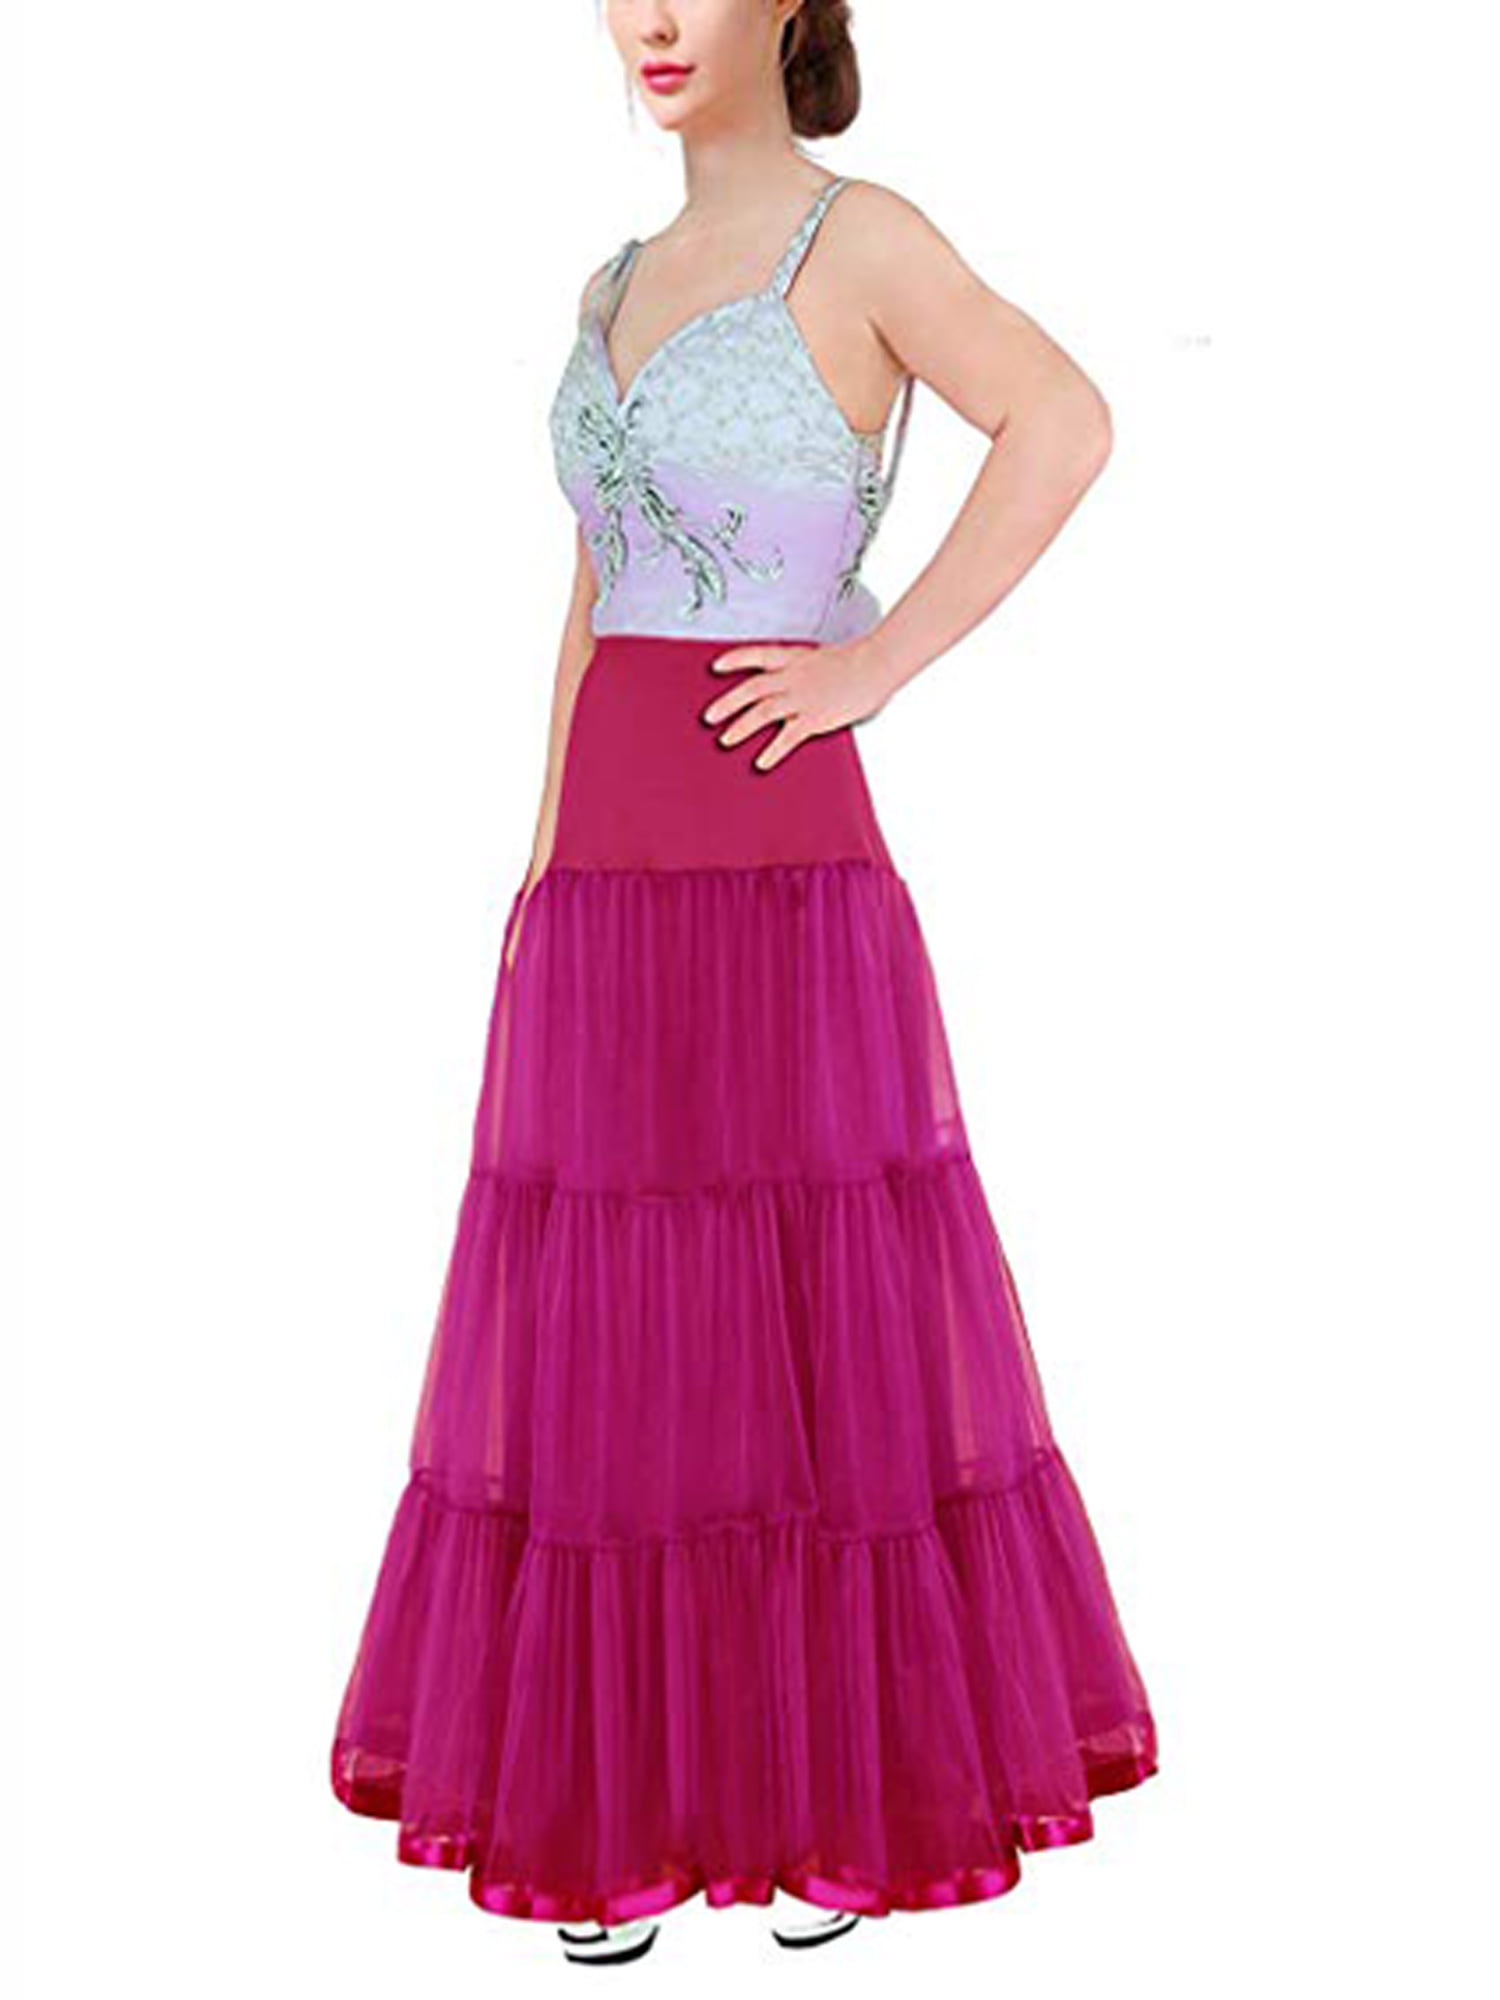 Cosplay Bridal Swing Vintage Prom Silps Crinoline Petticoat Swing Skirt TUTU 50s